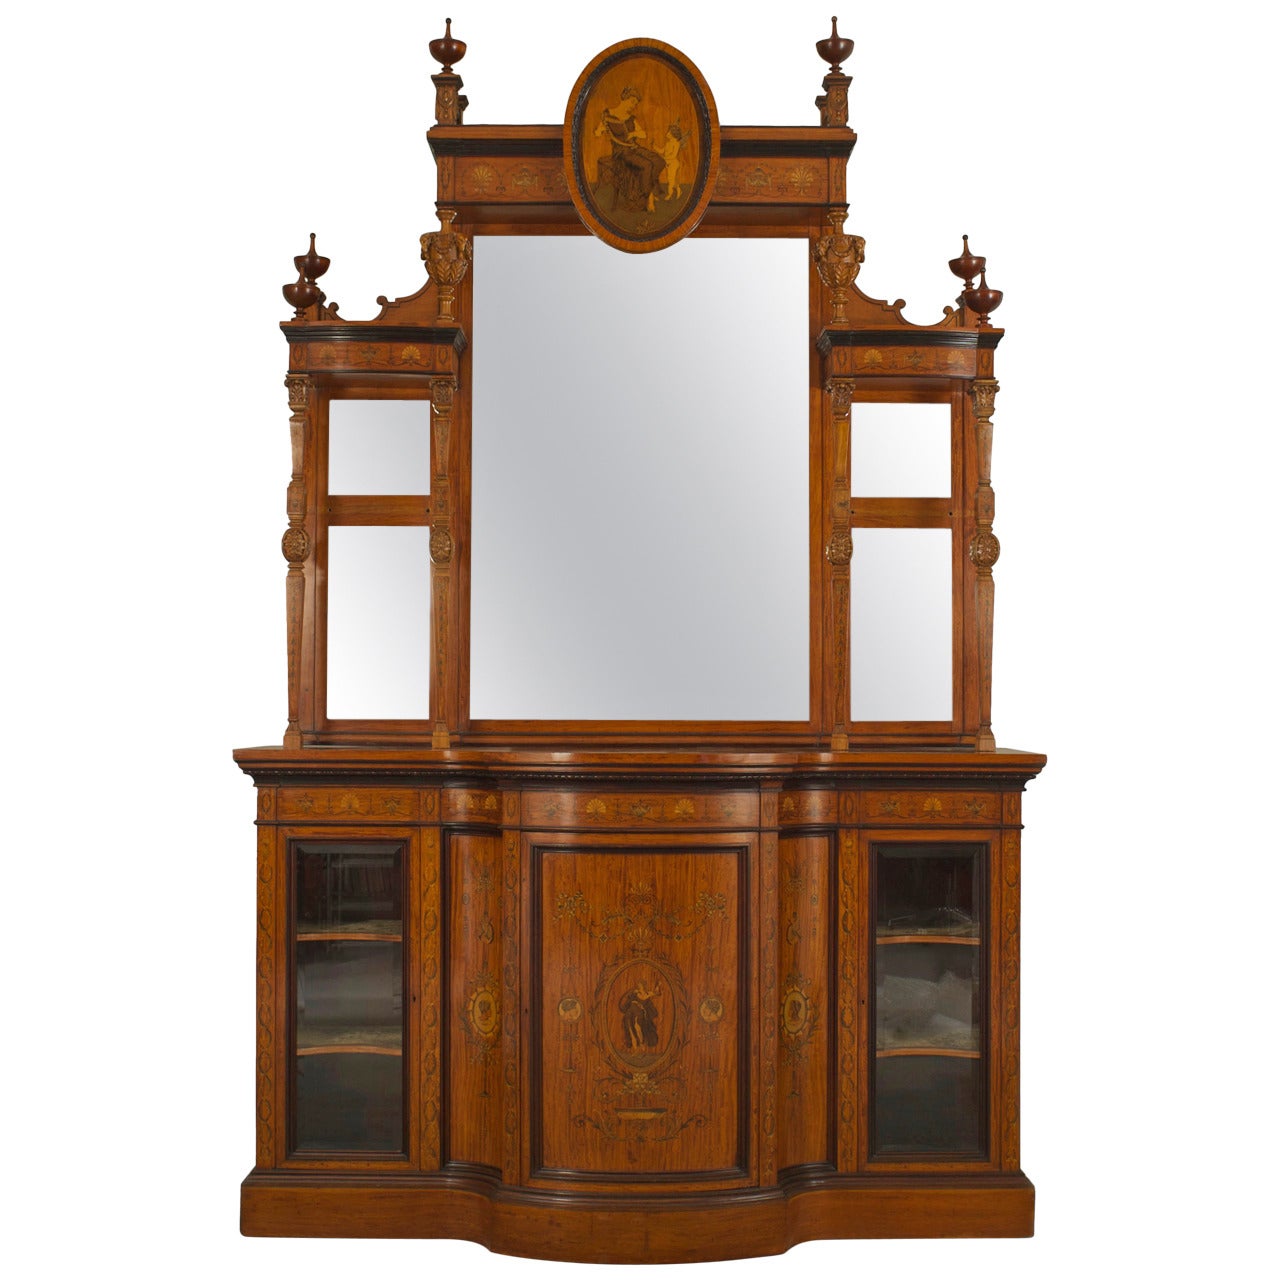 19th Century English Edwardian Mirrored Inlaid Satinwood Breakfront Cabinet